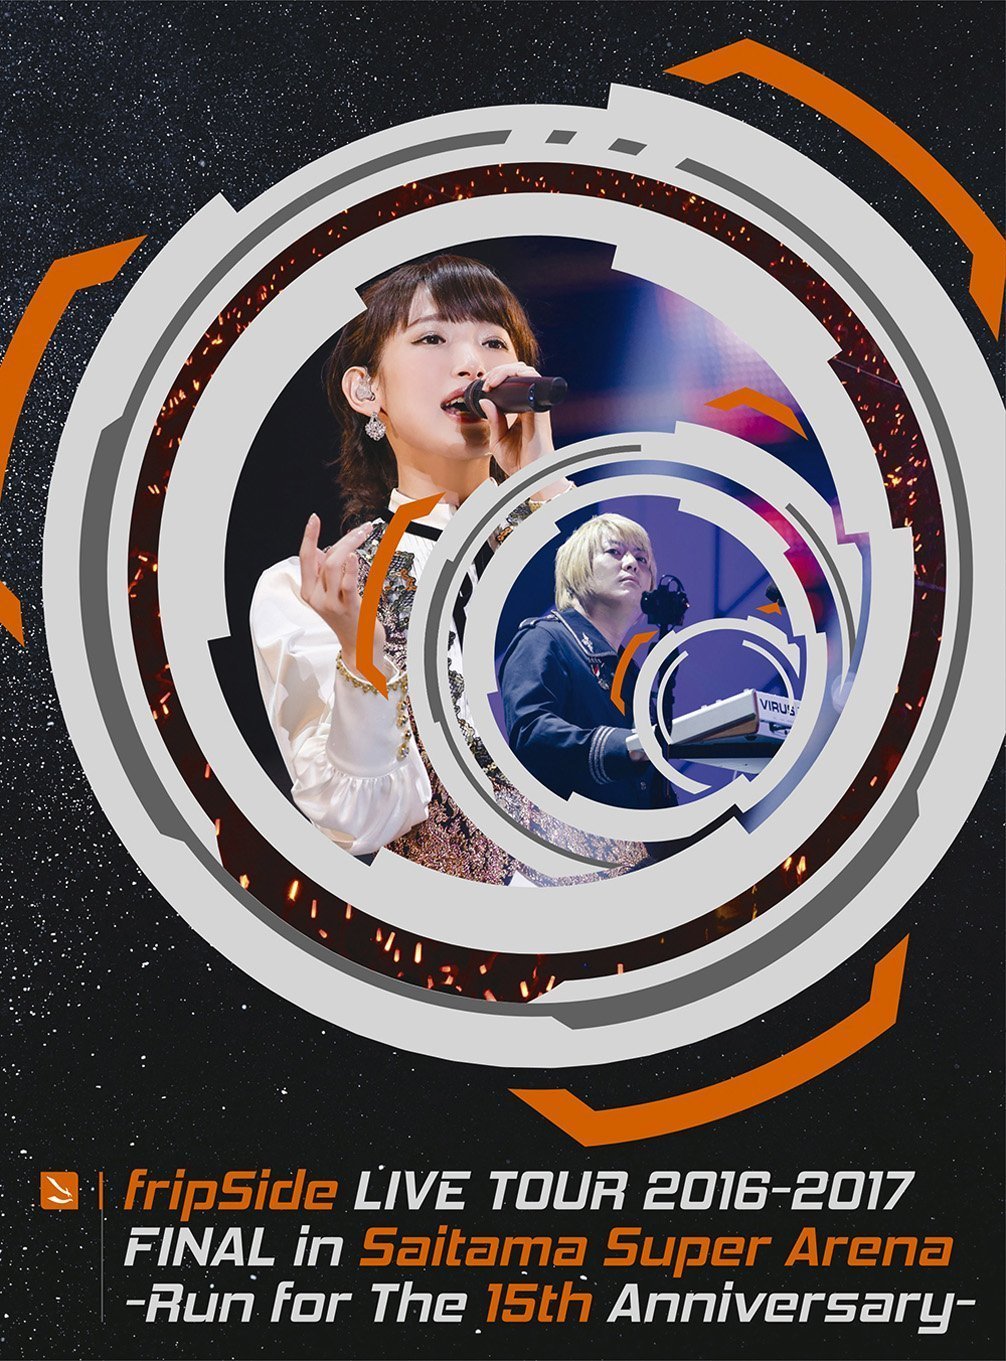 FripSide LIVE TOUR 2016-2017 FINAL 初回限定盤.jpg